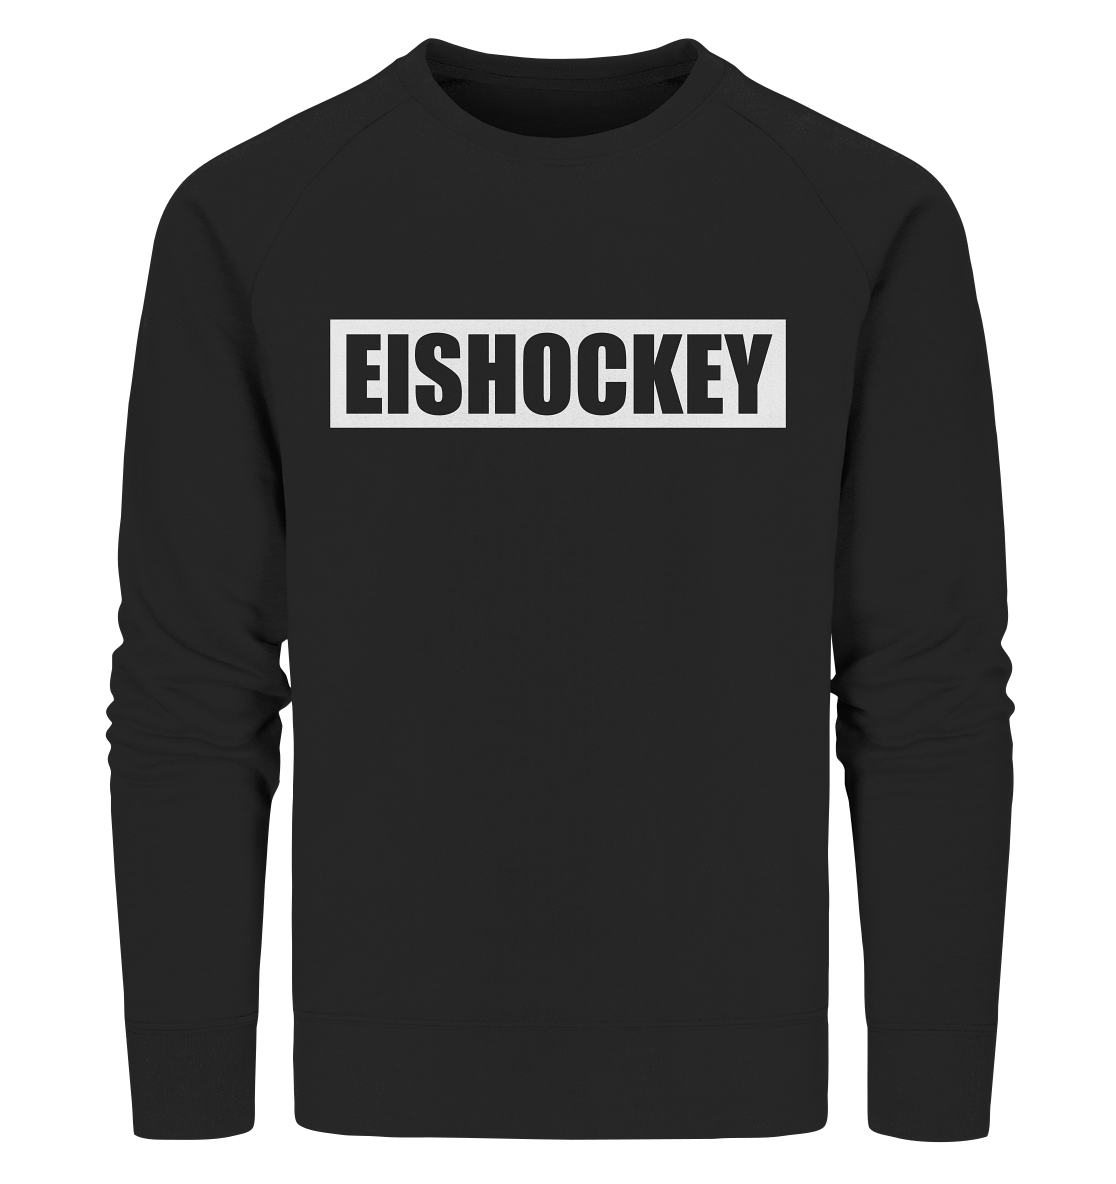 N.O.S.W. BLOCK Teamsport Sweater "EISHOCKEY" Männer Organic Sweatshirt schwarz